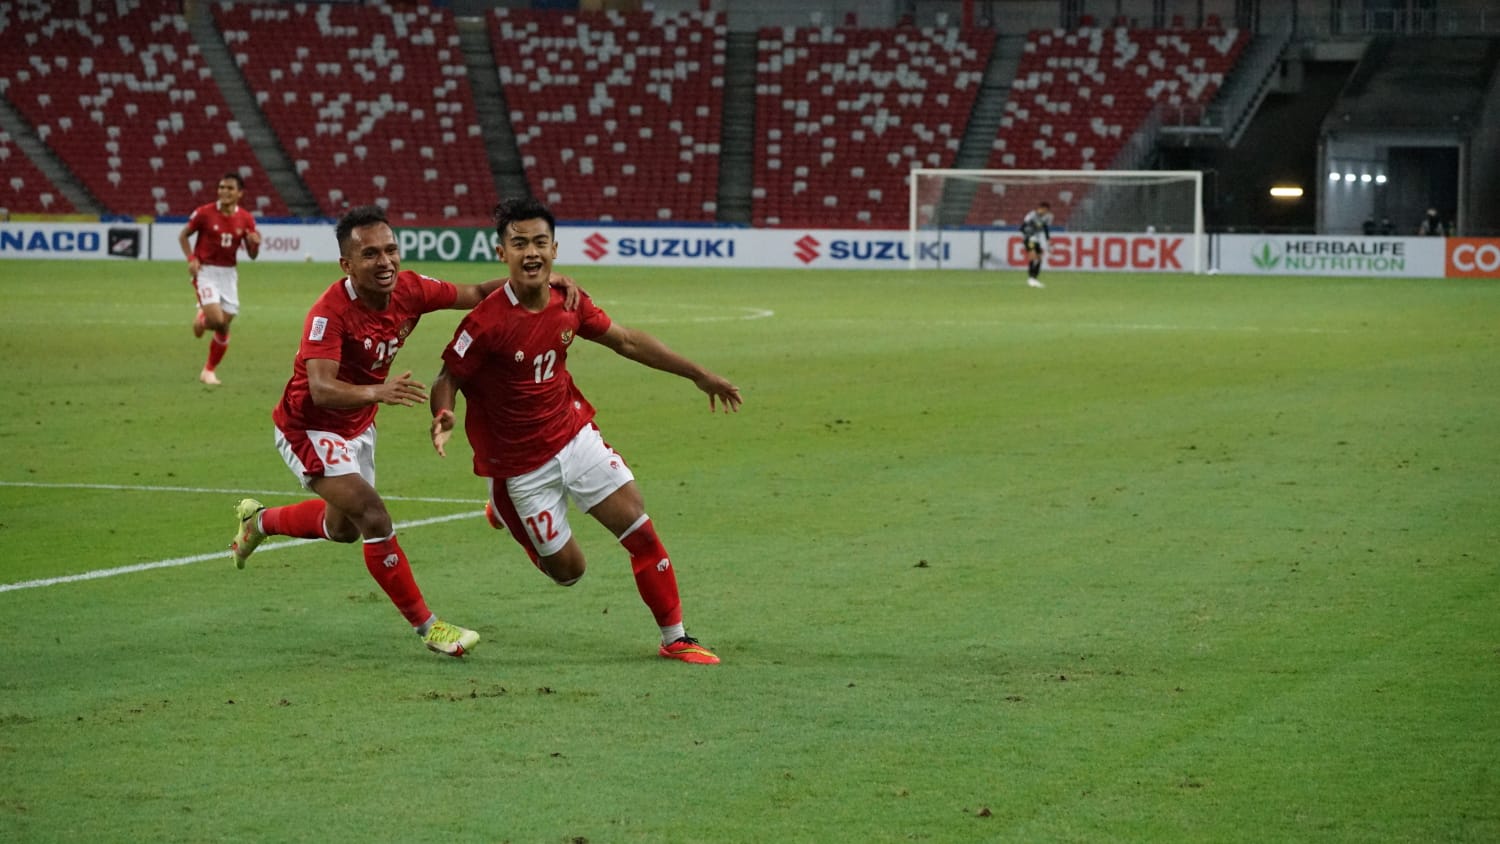 Dominasi Pratama Arhan pada Laga Timnas Indonesia vs Malaysia di Piala AFF 2020